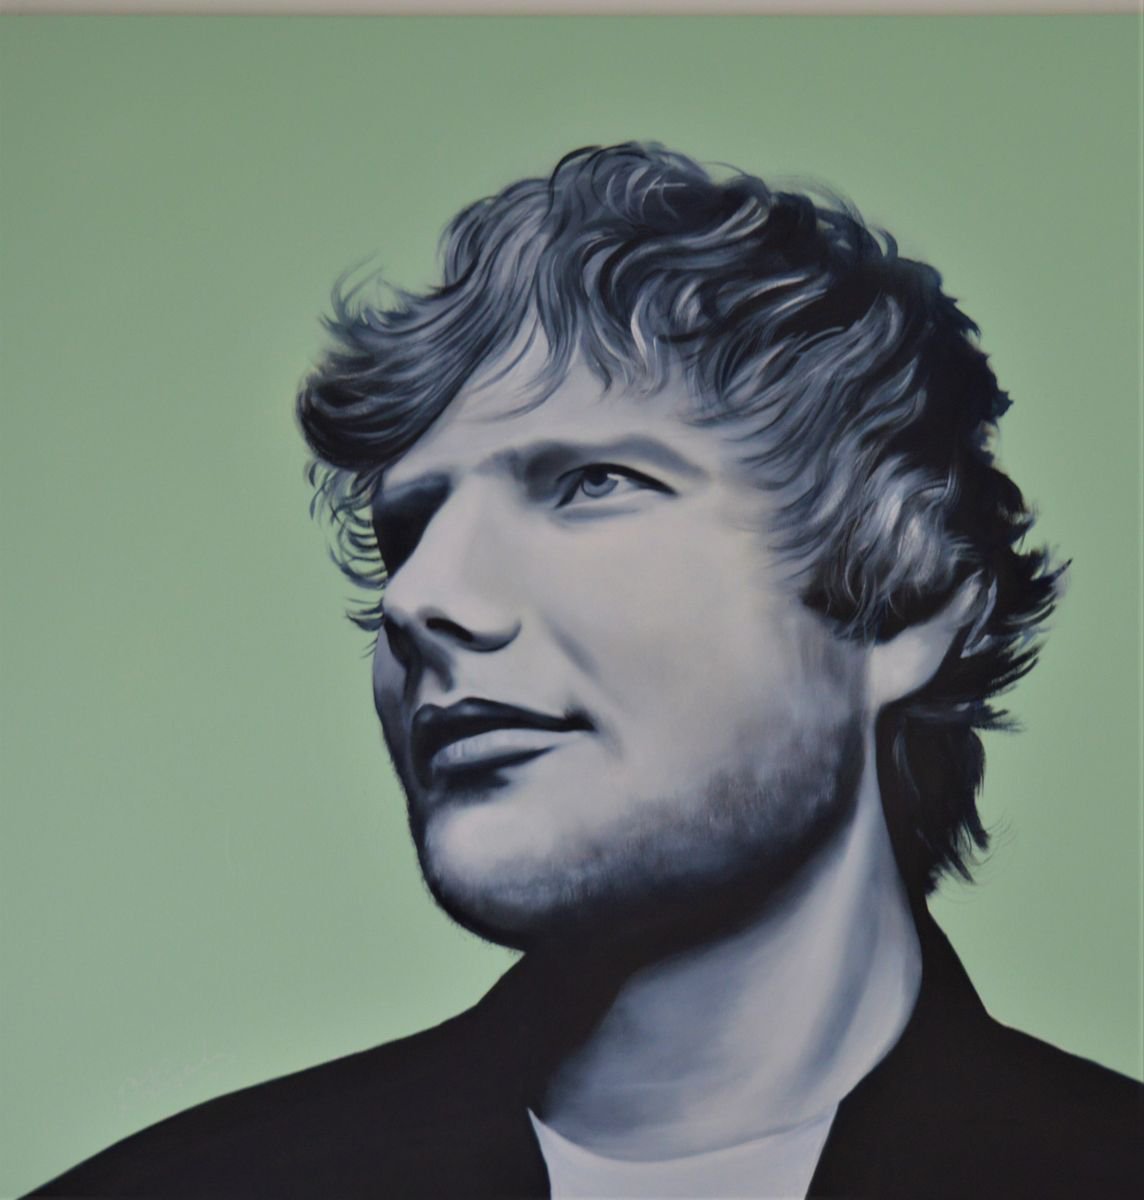 Ed Sheeran by Richard Garnham